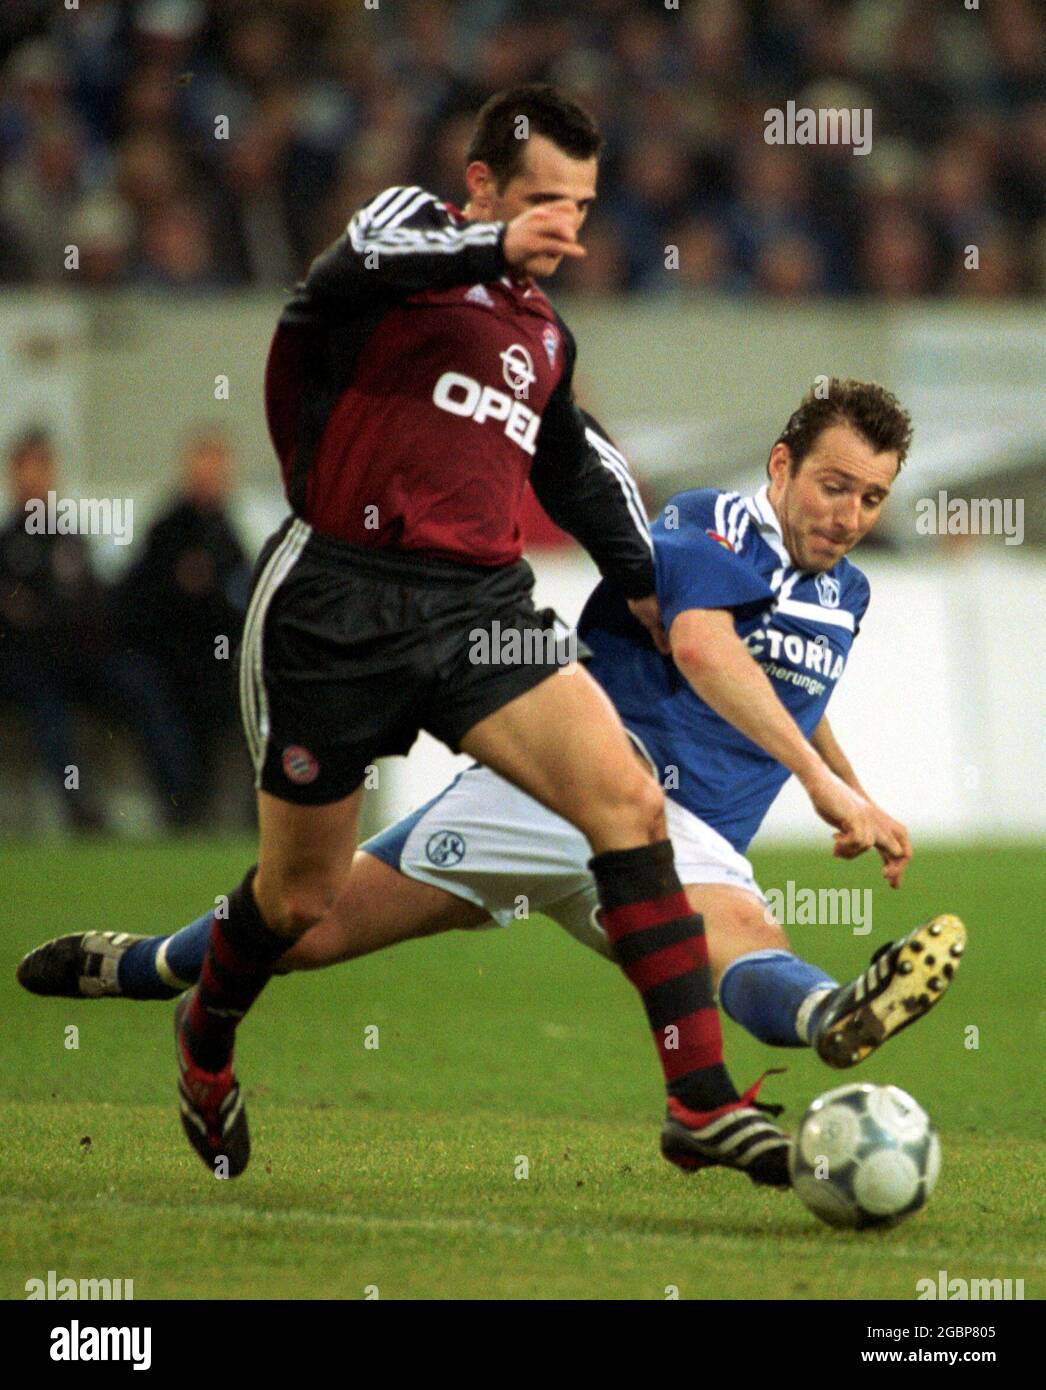 Gelsenkirchen Germany 26.1.2002, Football: Bundesliga Season 2001/02, FC  Schalke 04 (S04, blue) vs FC Bayern Munich (FCB,red) 5:1 — OMarc WILMOTS  (S04) , Willy SAGNOL (FCB Stock Photo - Alamy